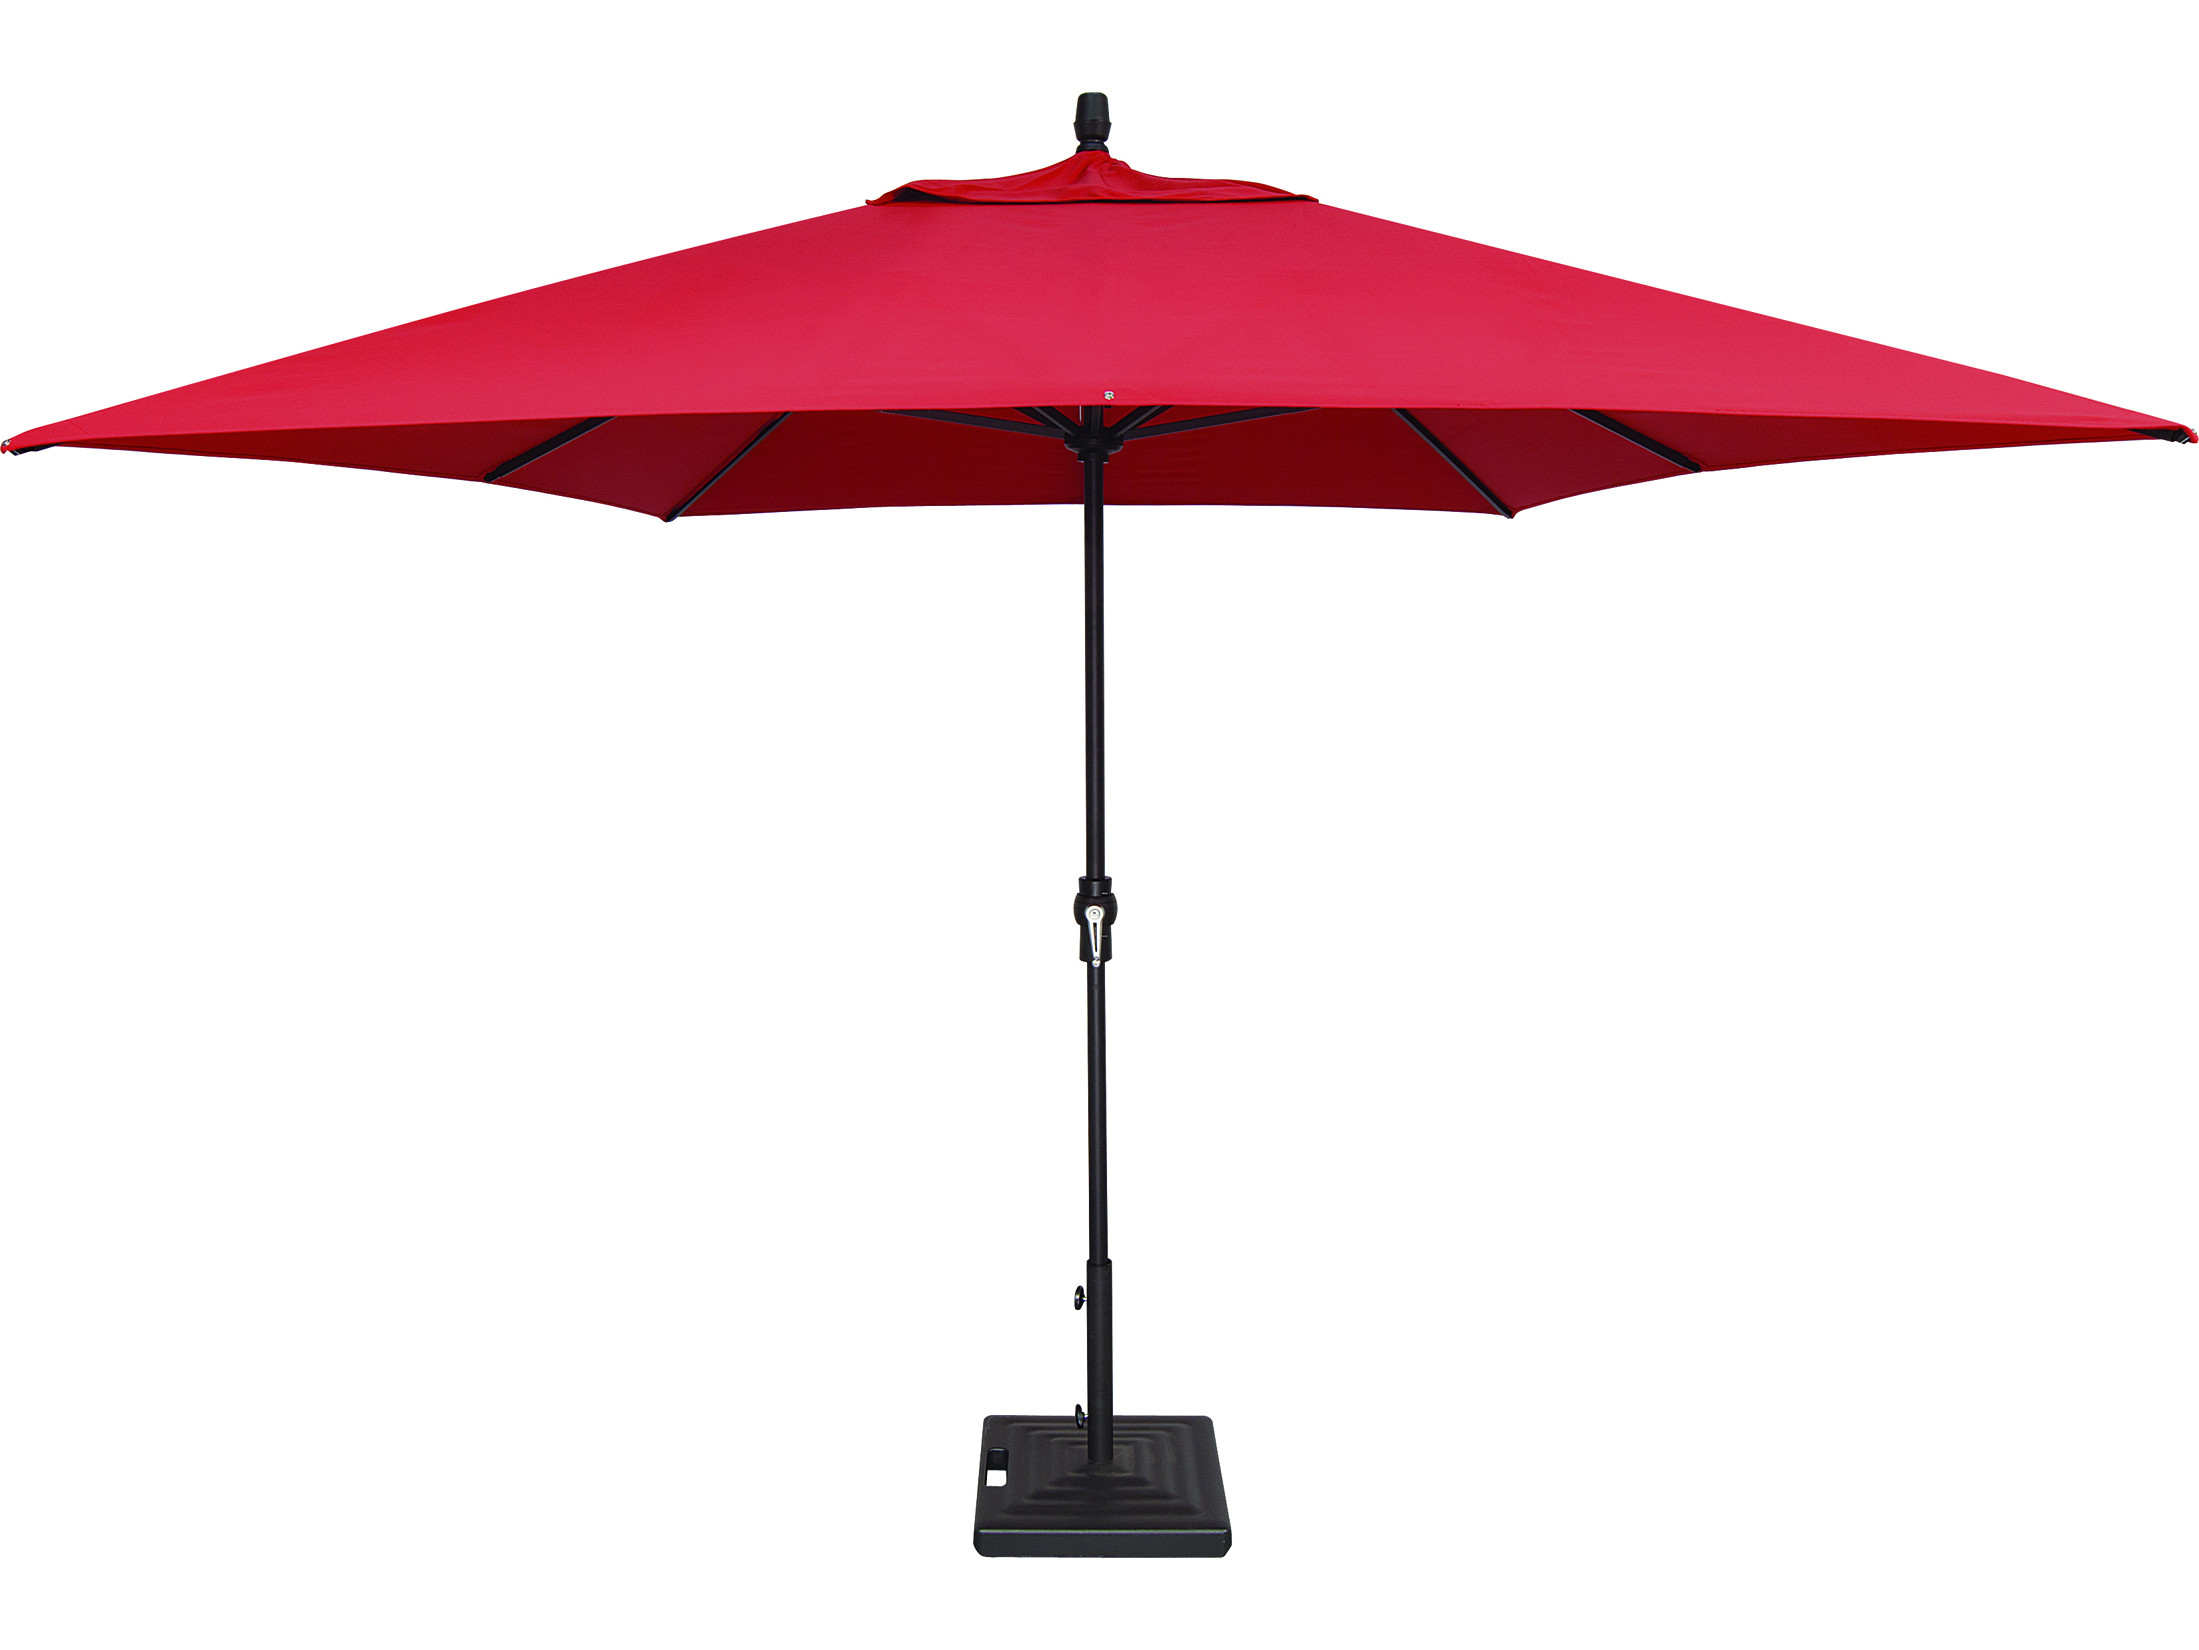 Best ideas about Walmart Patio Umbrella
. Save or Pin Treasure Garden Market Aluminum 8 x 11 Crank Lift Now.